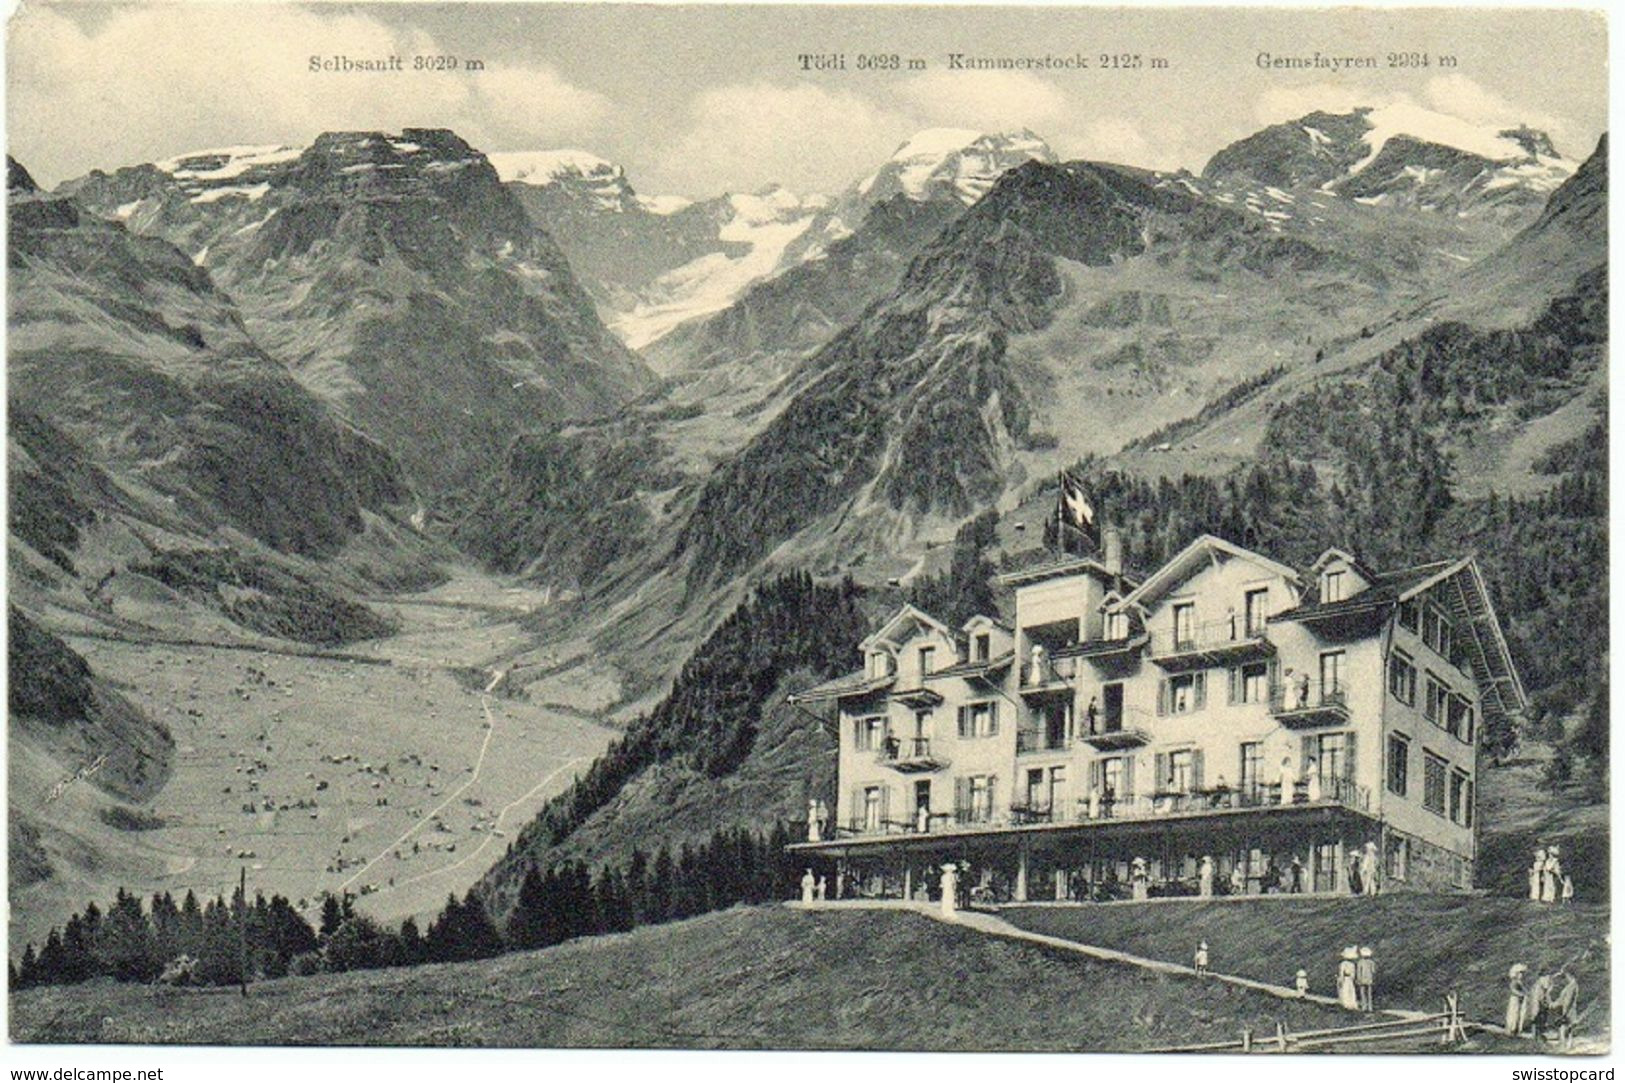 BRAUNWALD Hotel Niederschlacht 1230 M.ü.M. Gel. 1913 N. Rüti Glarus - Rüti